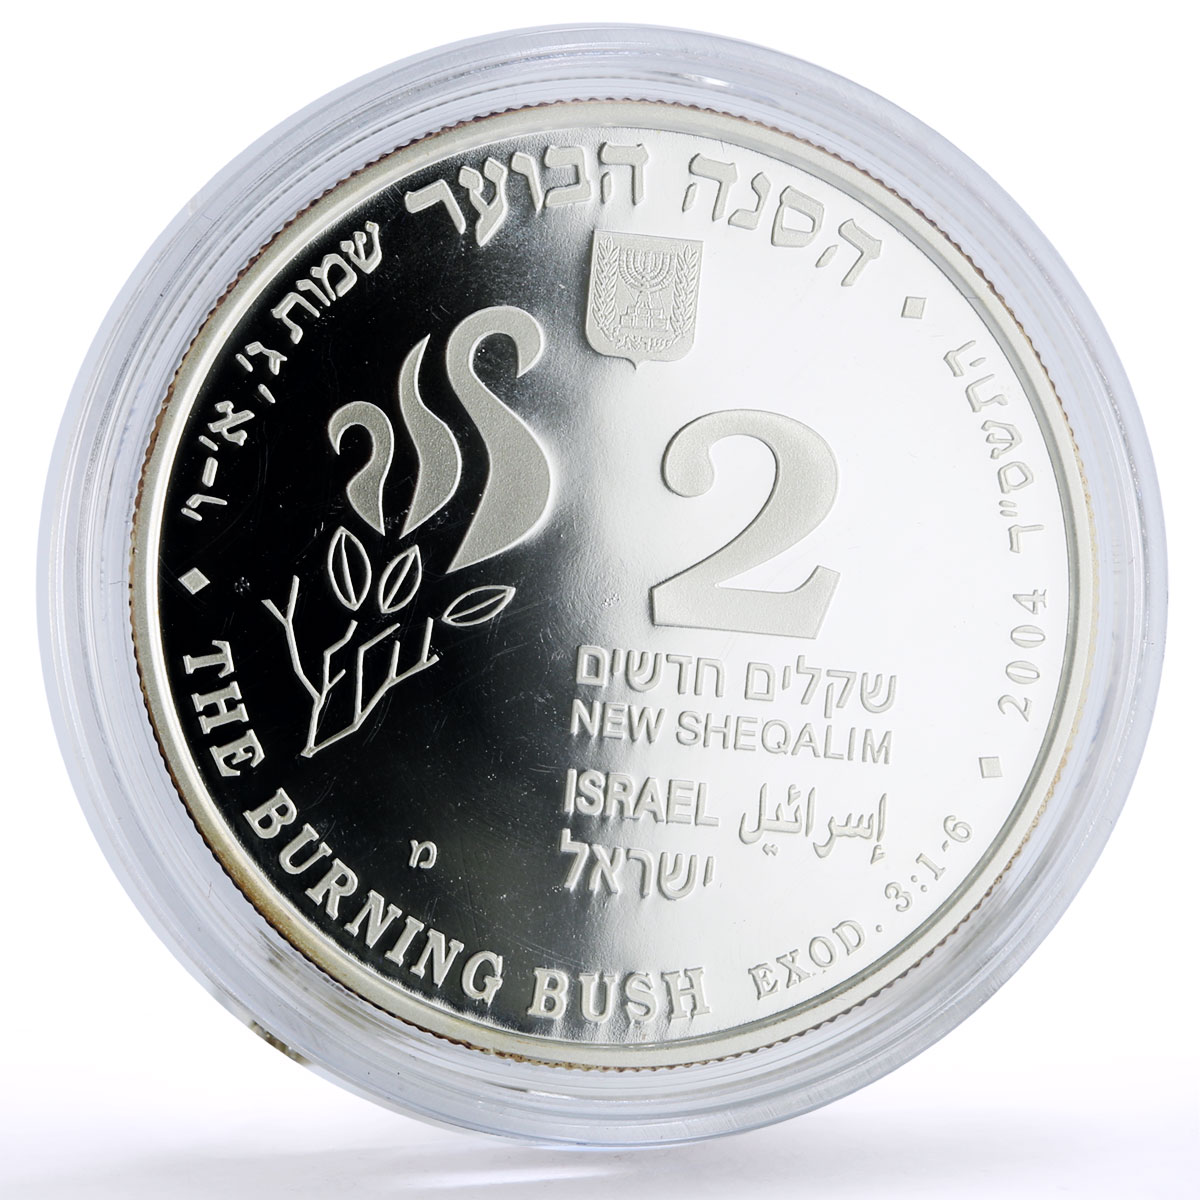 Israel 2 sheqalim Biblical Art Burning Bush proof silver coin 2004